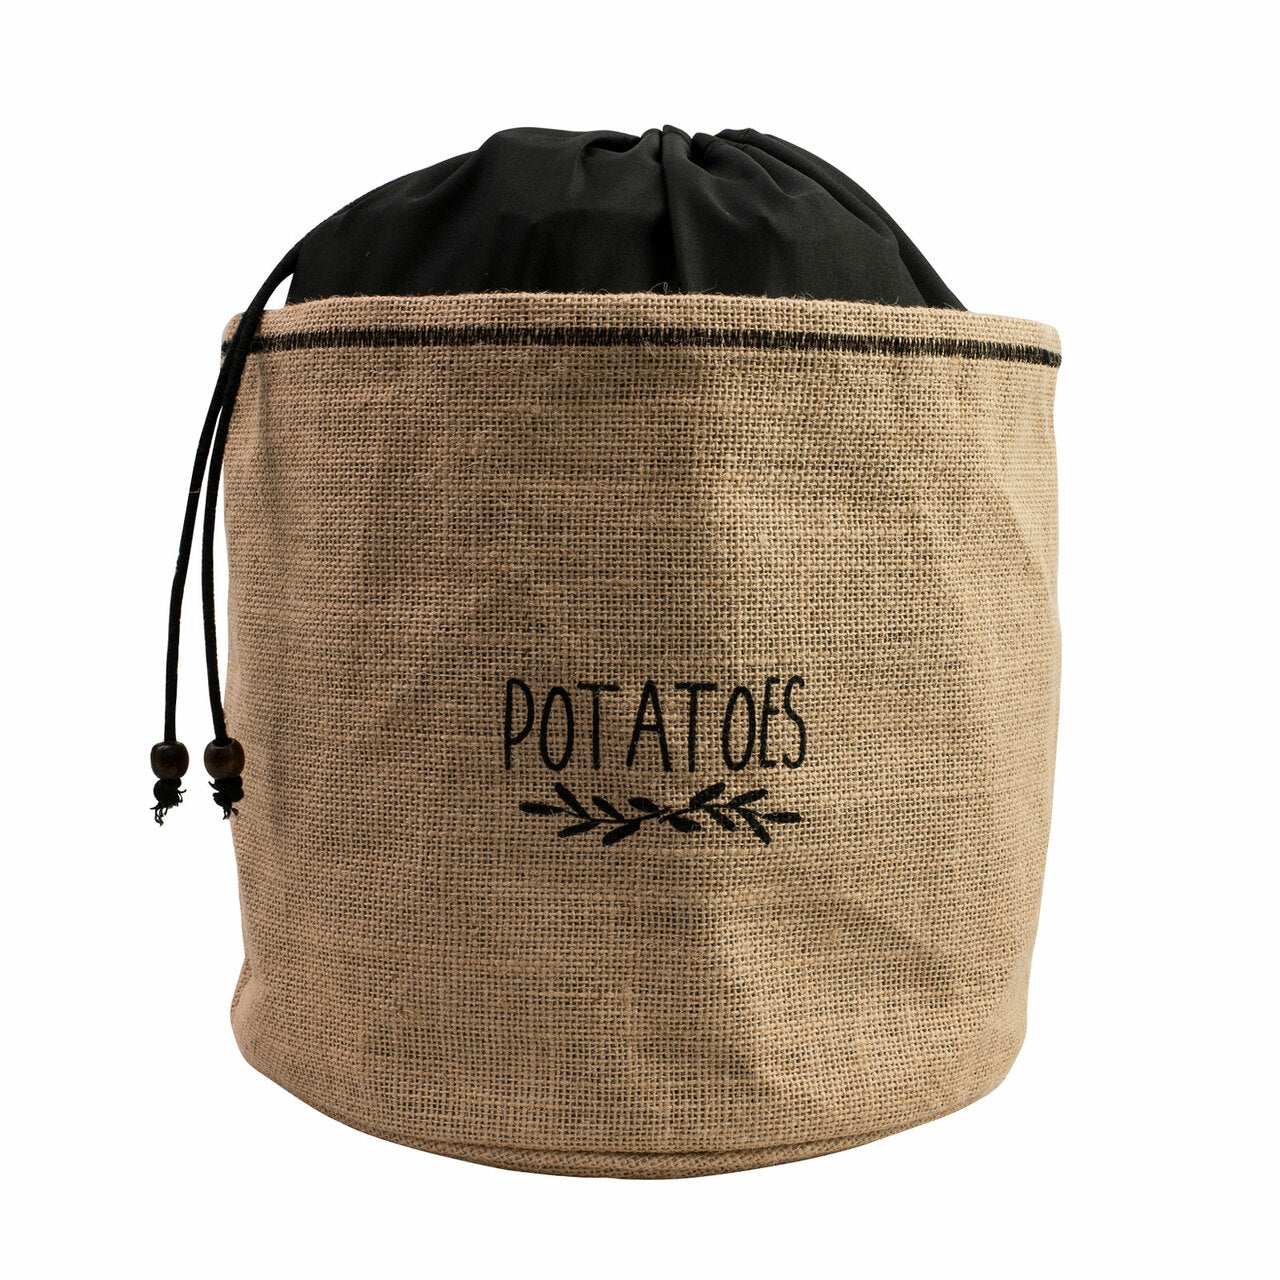 Potato Storage Bag